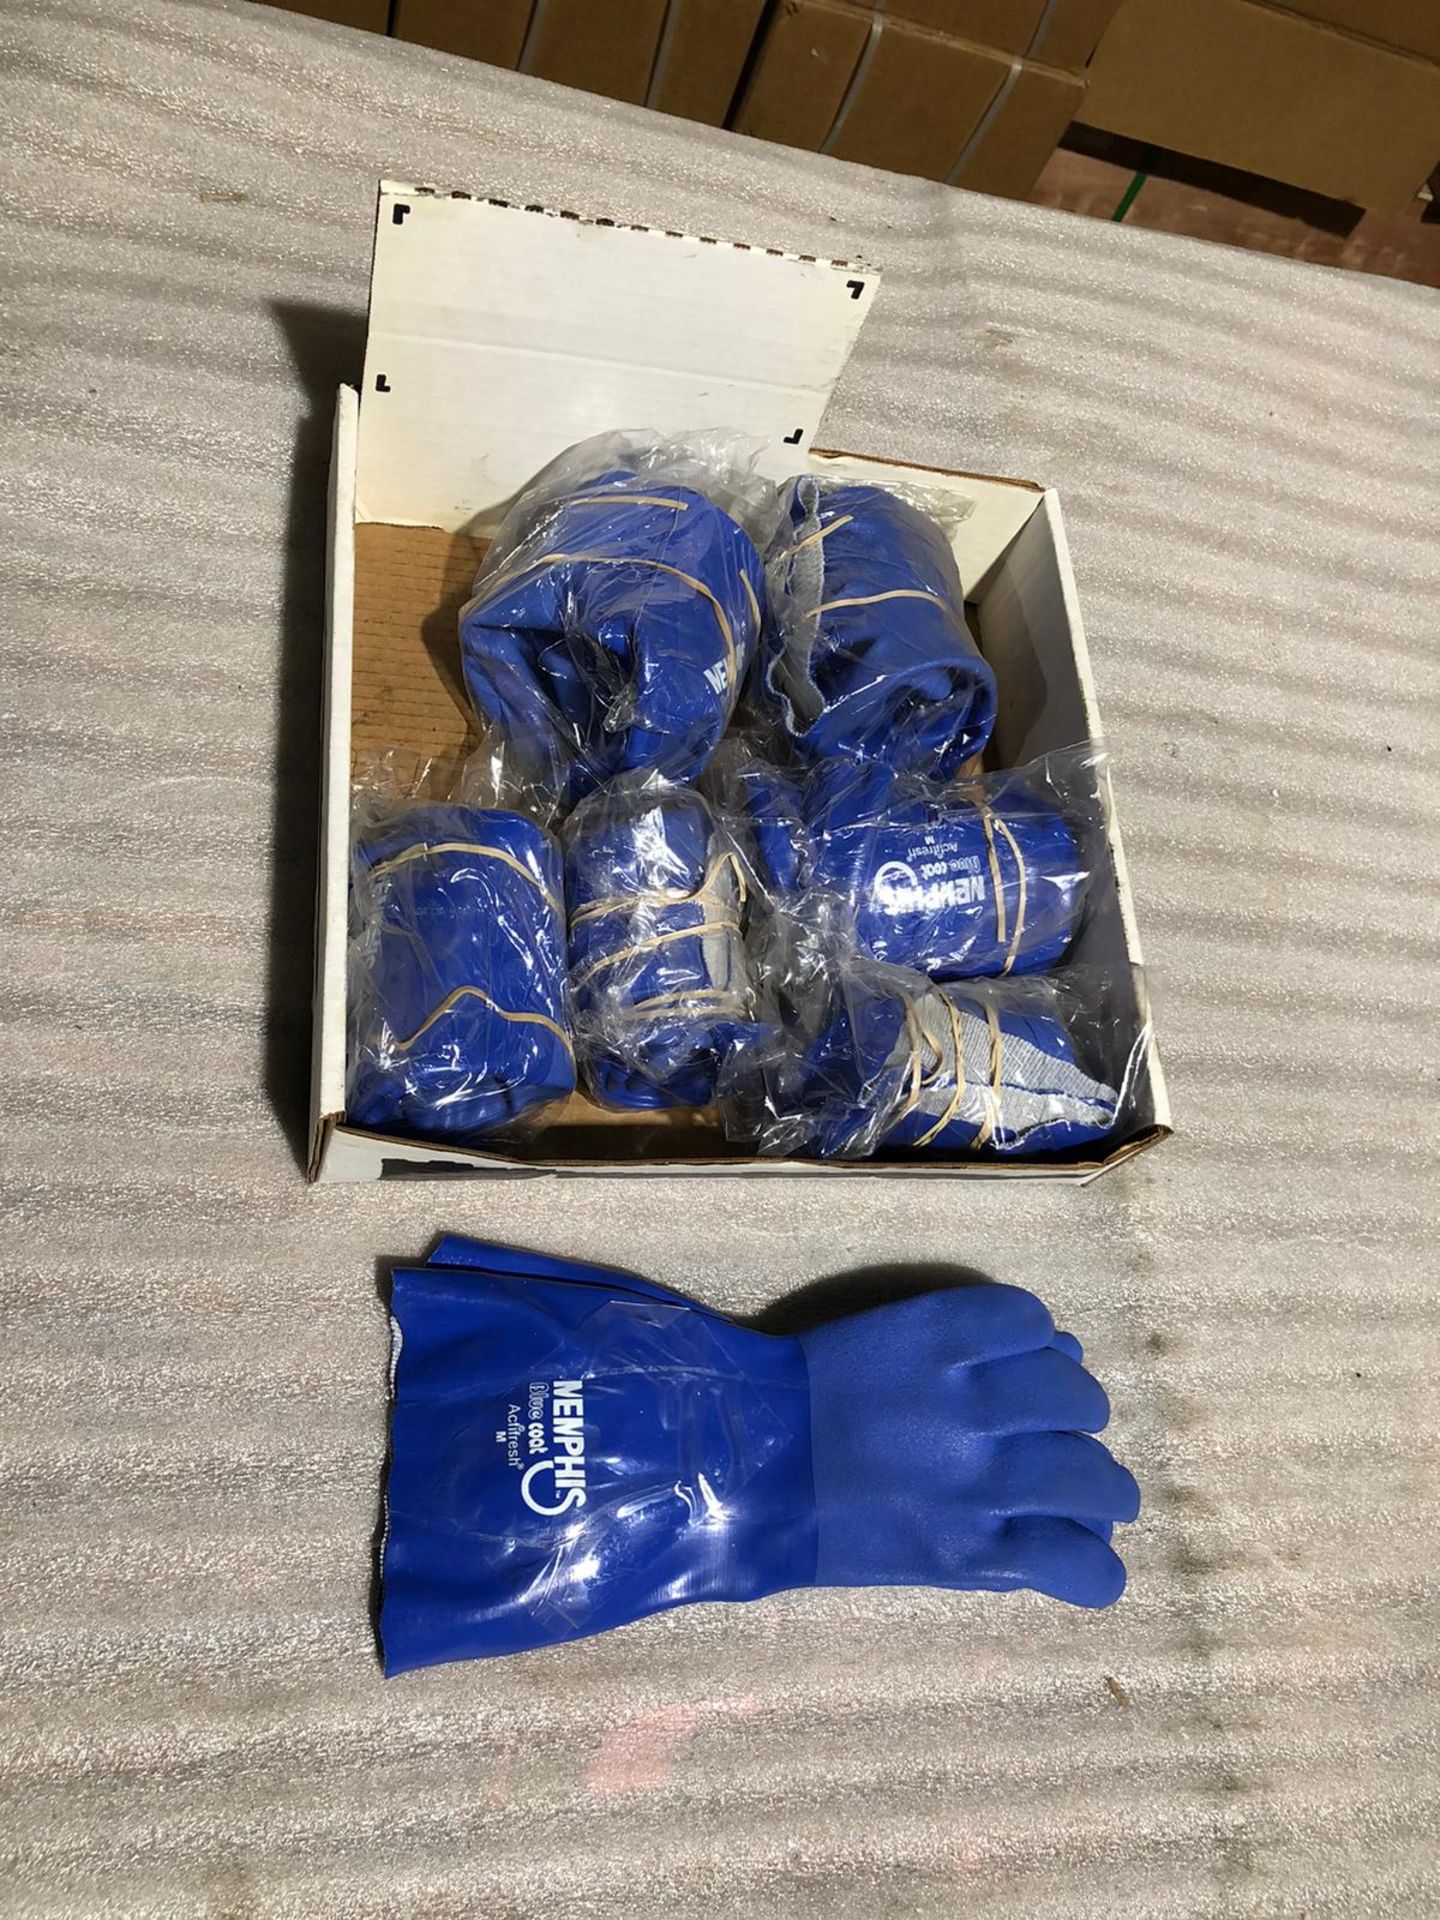 Memphis Blue Coat Waterproof Gloves - 7 pairs - Size M - Image 3 of 3